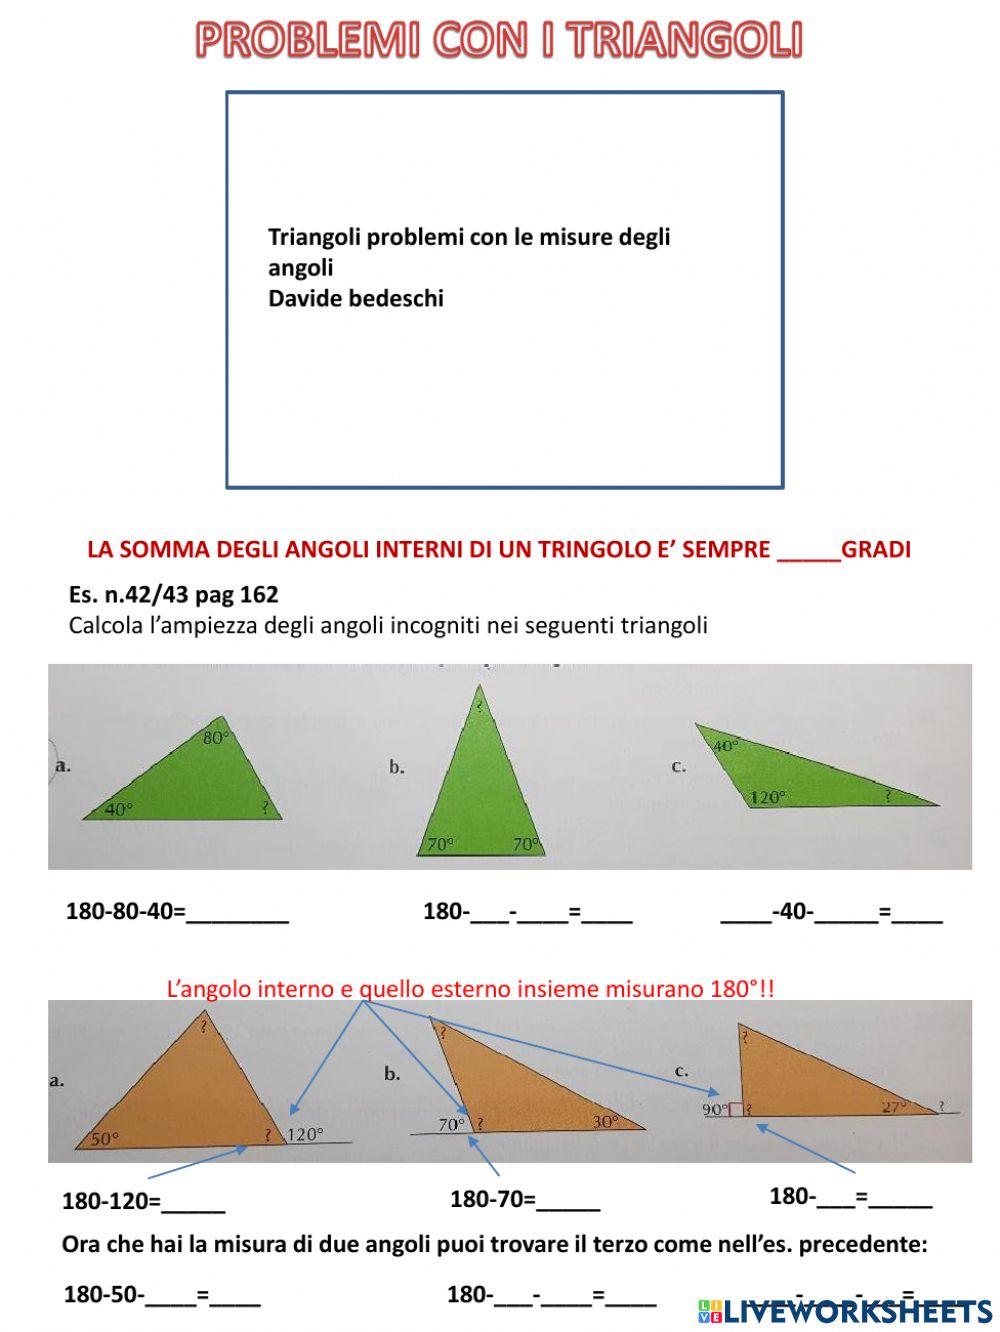 Triangoli (angoli)